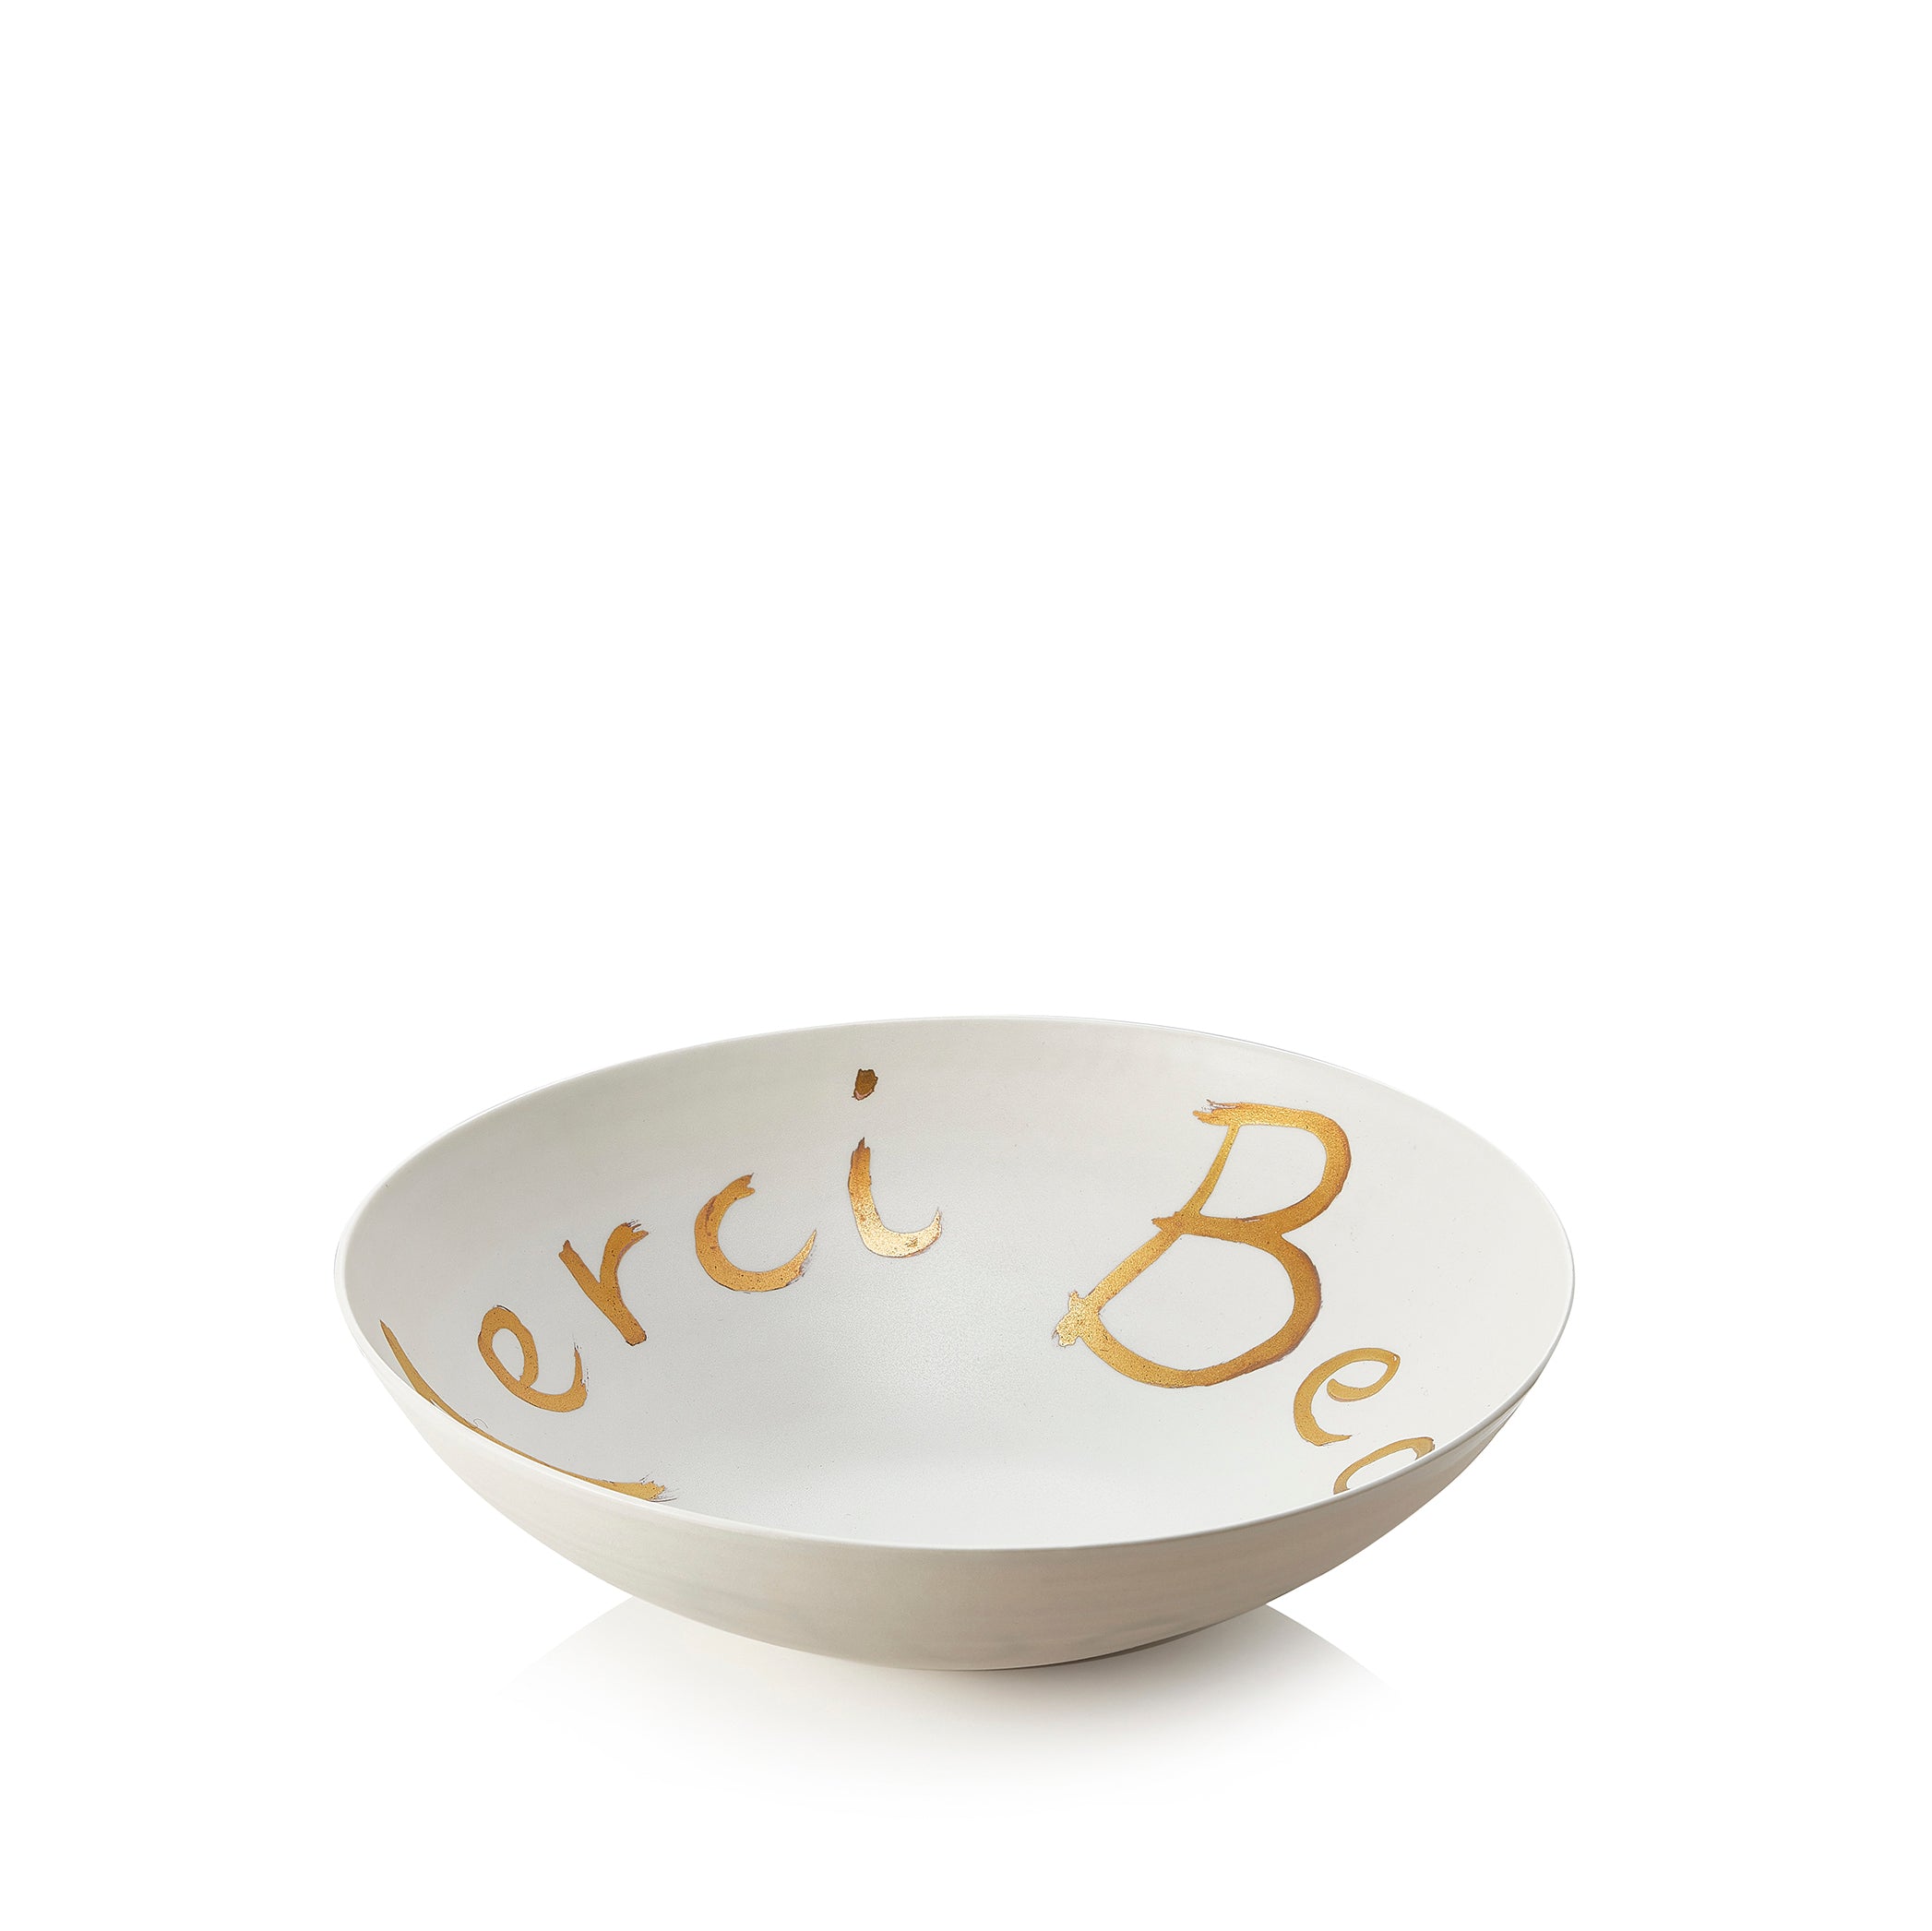 Merci Beaucoup Porcelain Bowl in Matte Gold